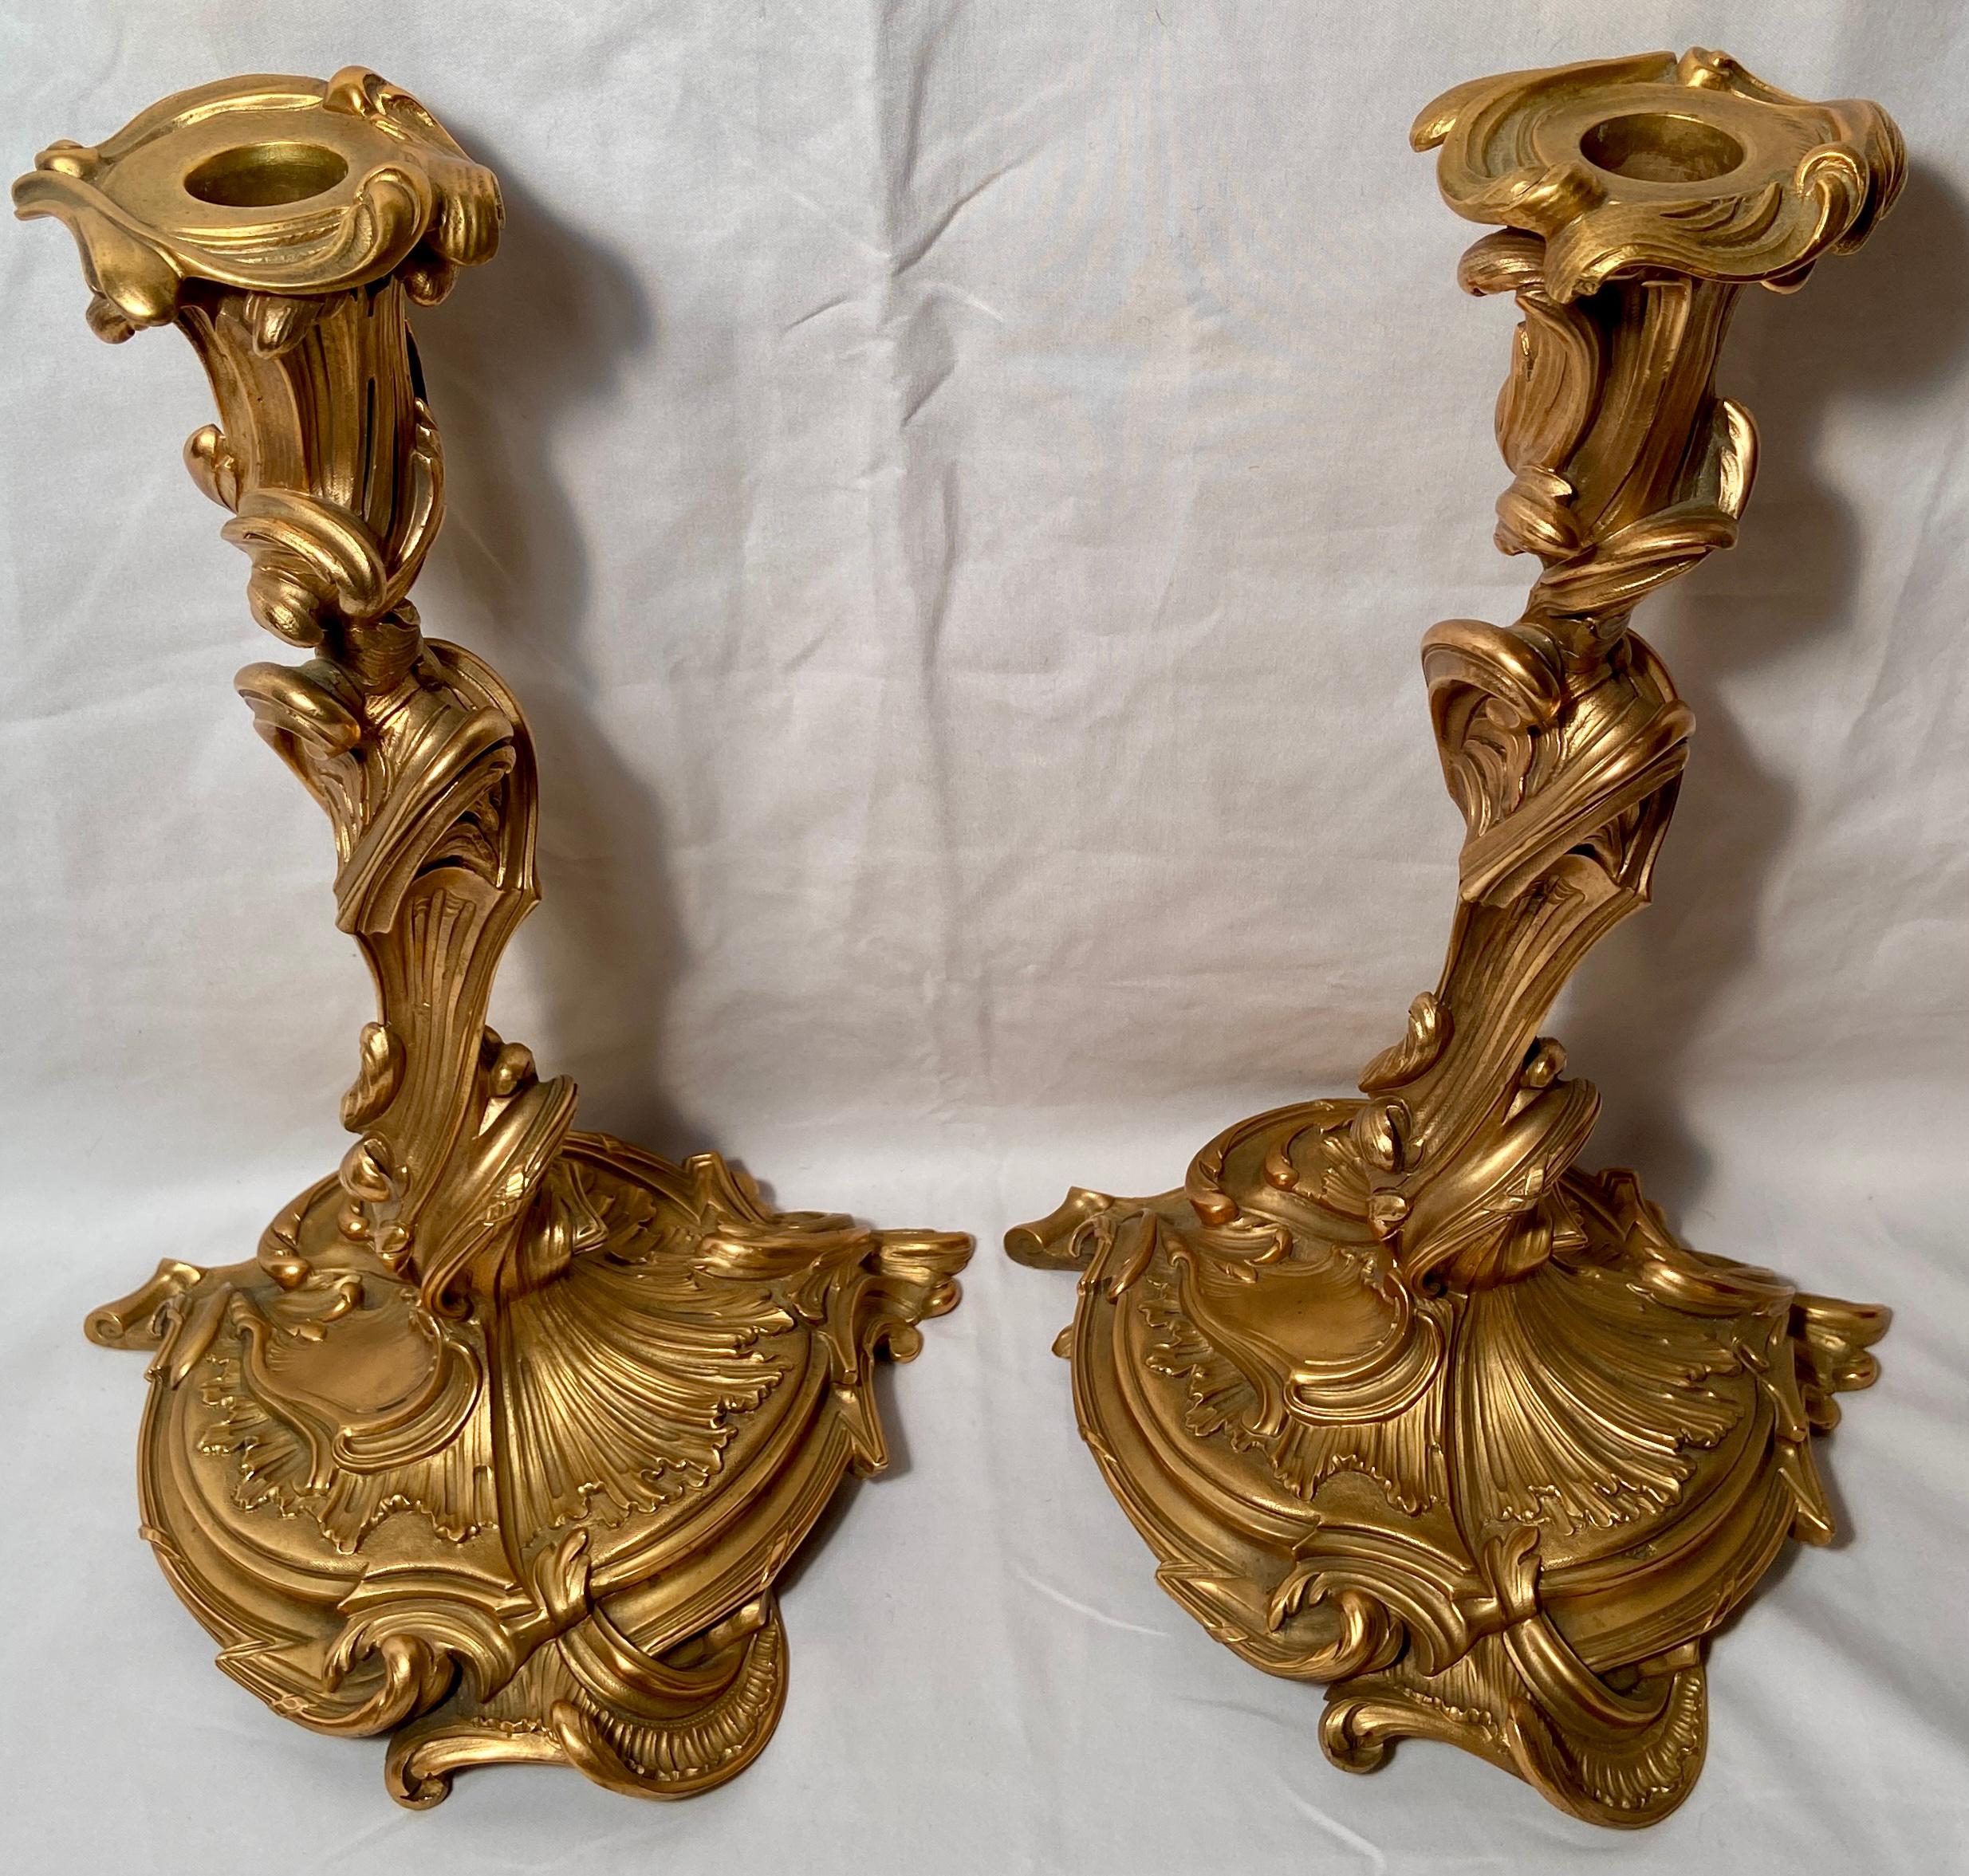 Exceptional pair antique French Ormolu candlesticks, Circa 1870-1880.